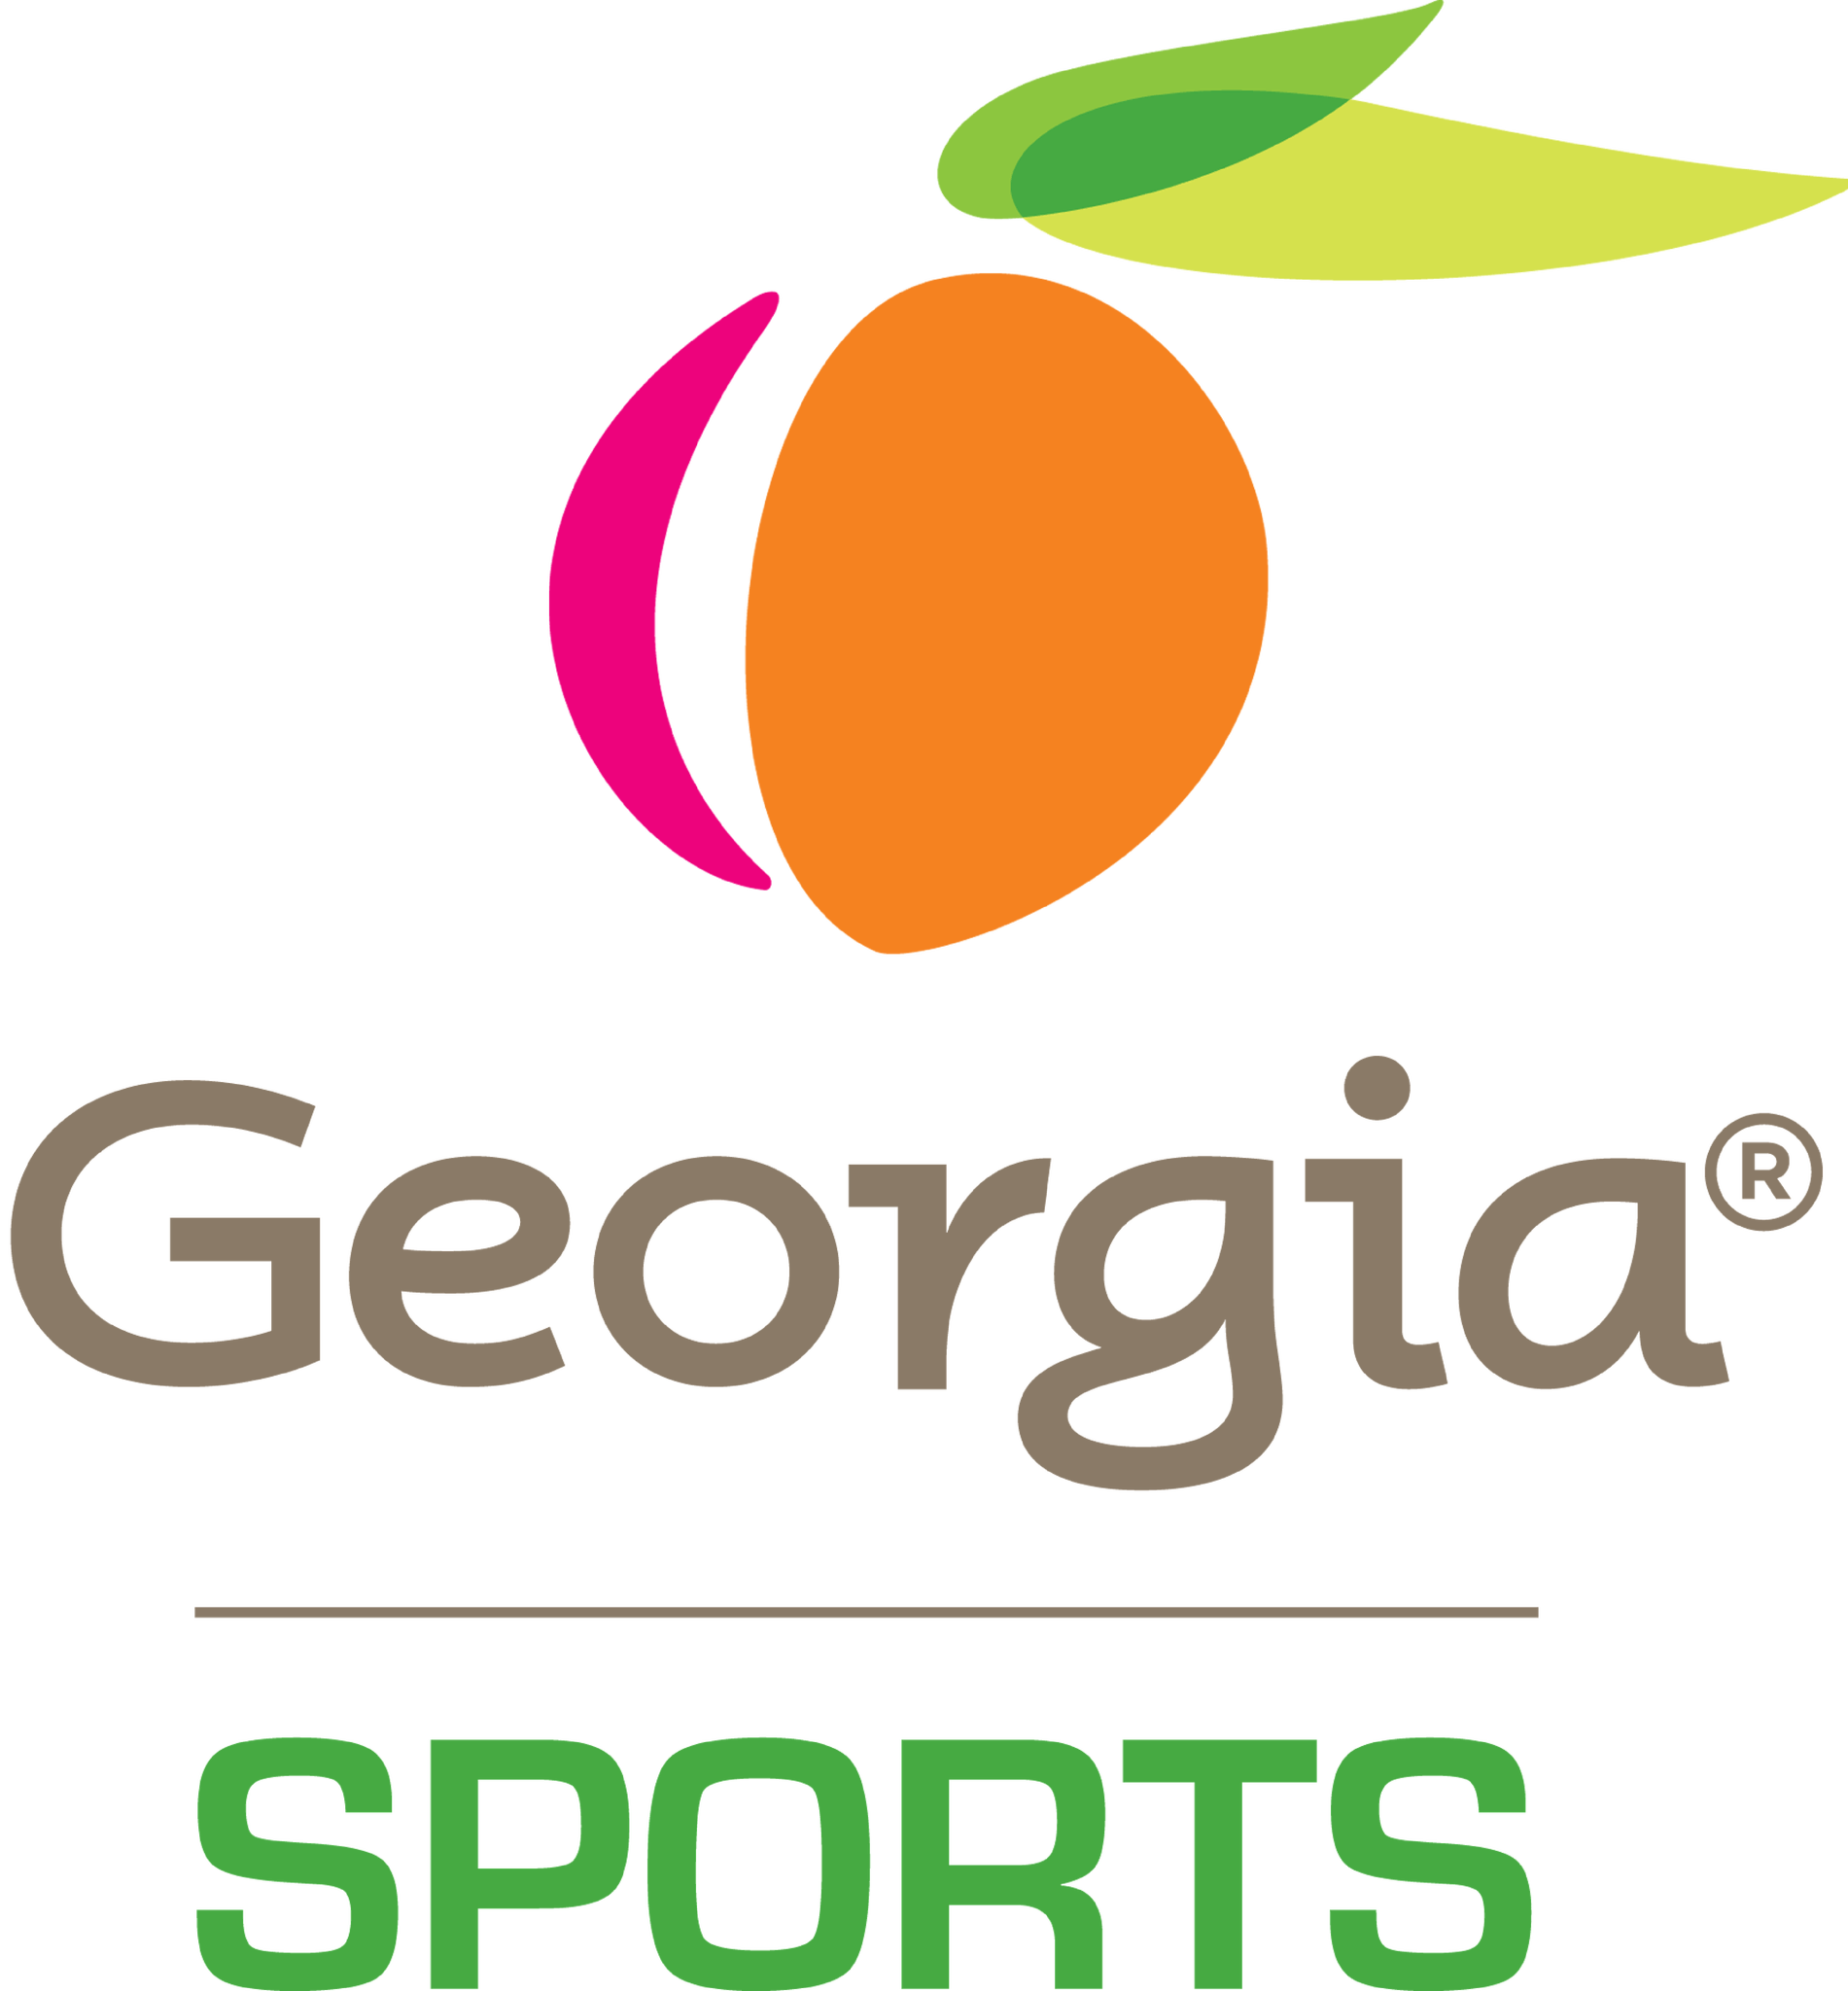 Georgia Sports